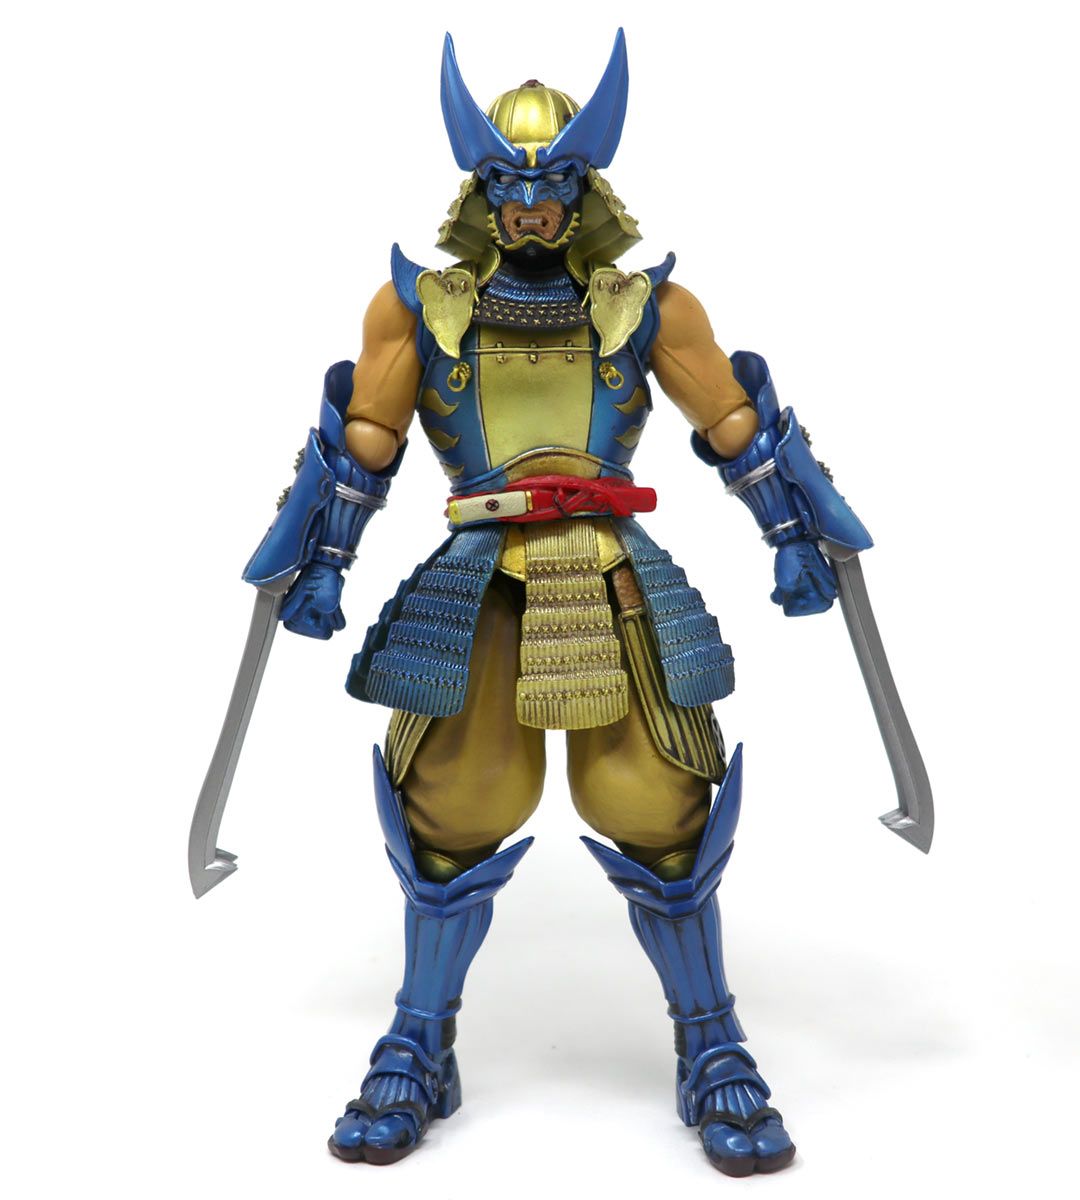 MMR Muhomono Wolverine (Marvel)